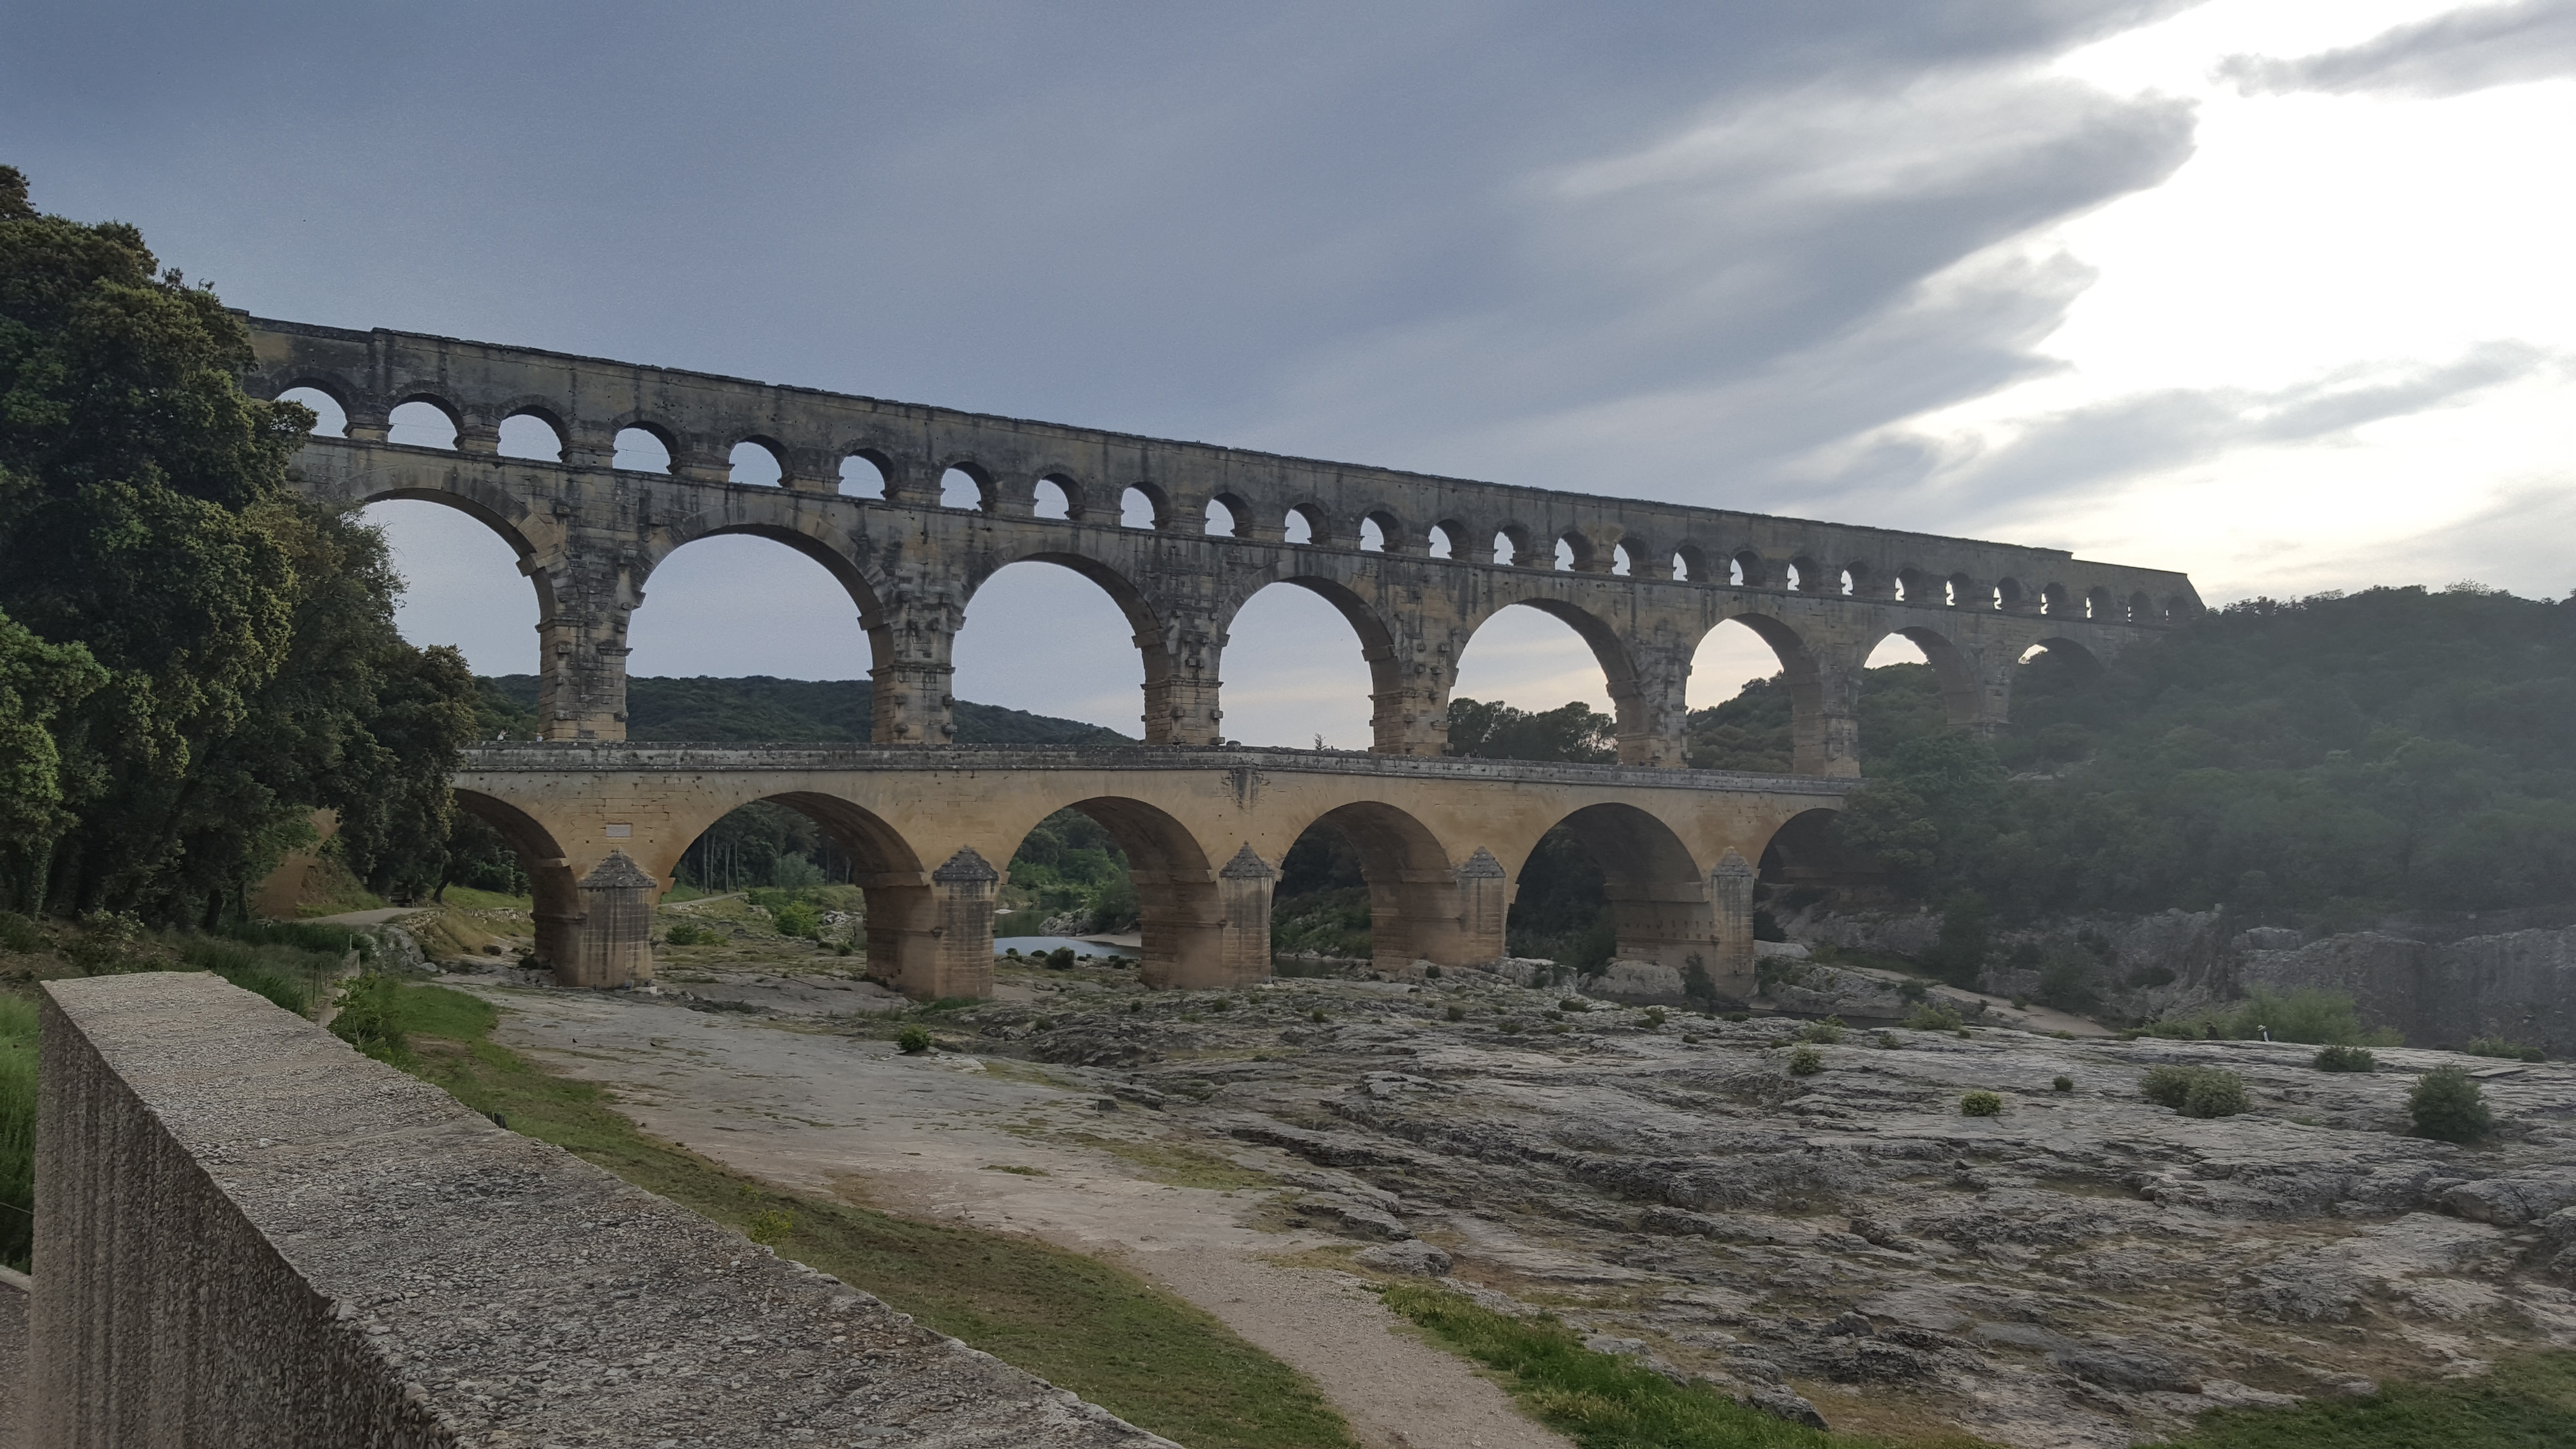 A view of the Pont du Gard, Arles, France